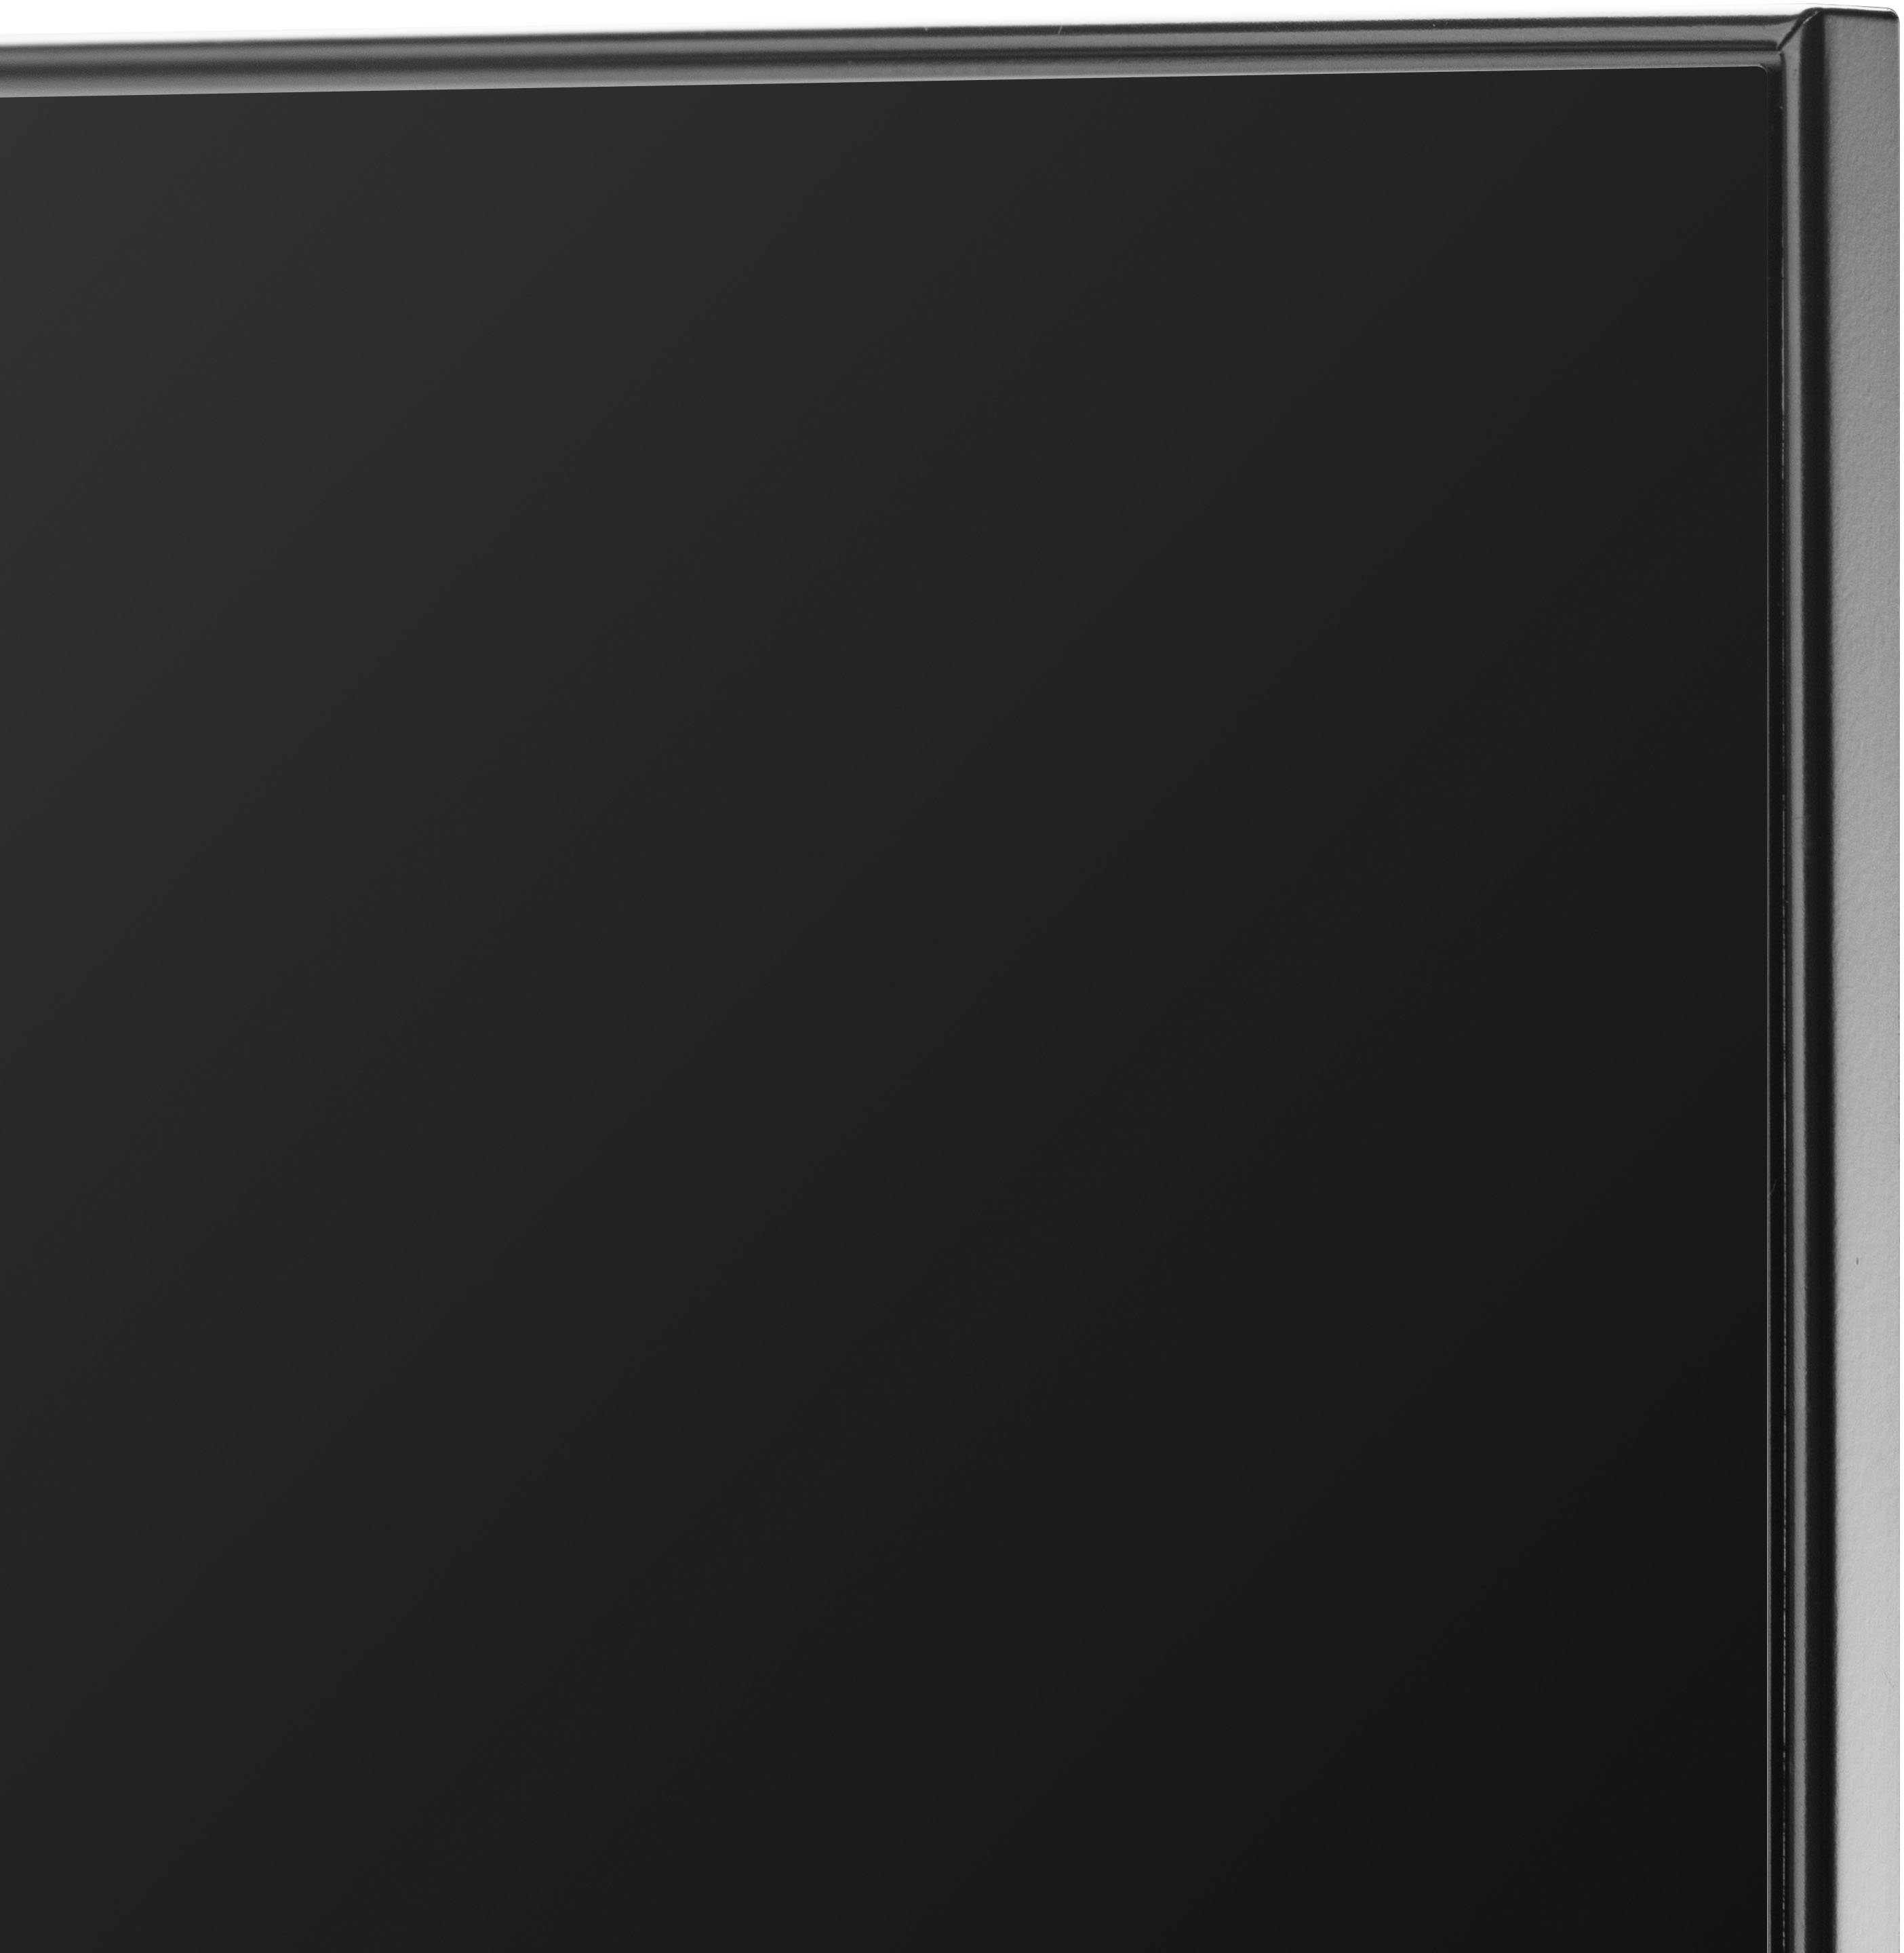 TCL 55 Class 6-Series Mini-LED QLED 4K UHD Smart Google TV 55R646 - Best  Buy